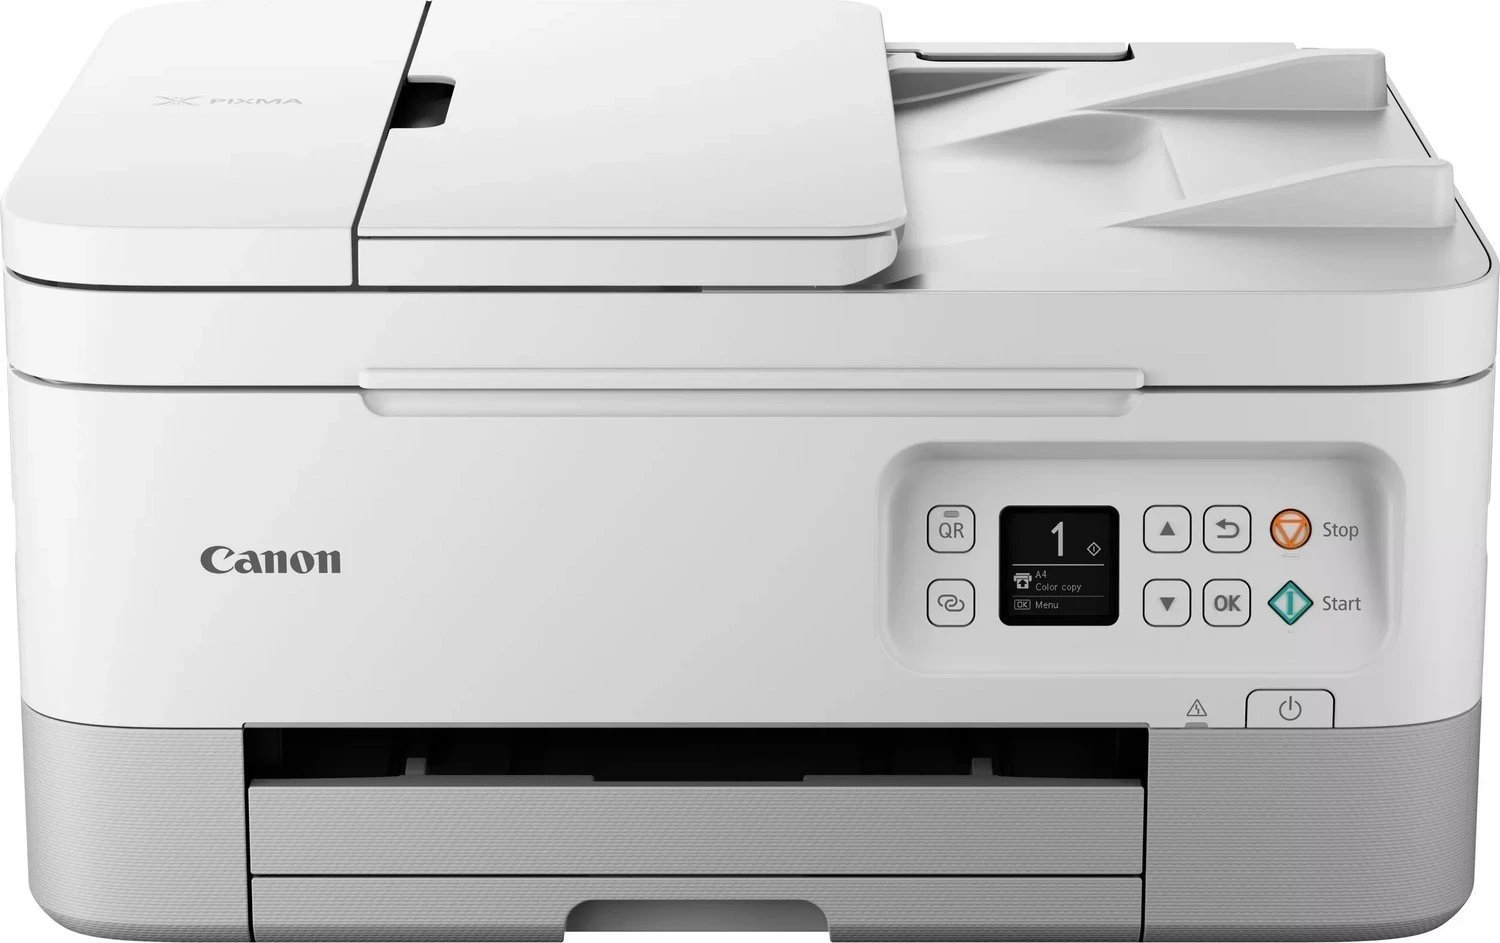 Printer Canon PIXMA TS7451A, i bardhë